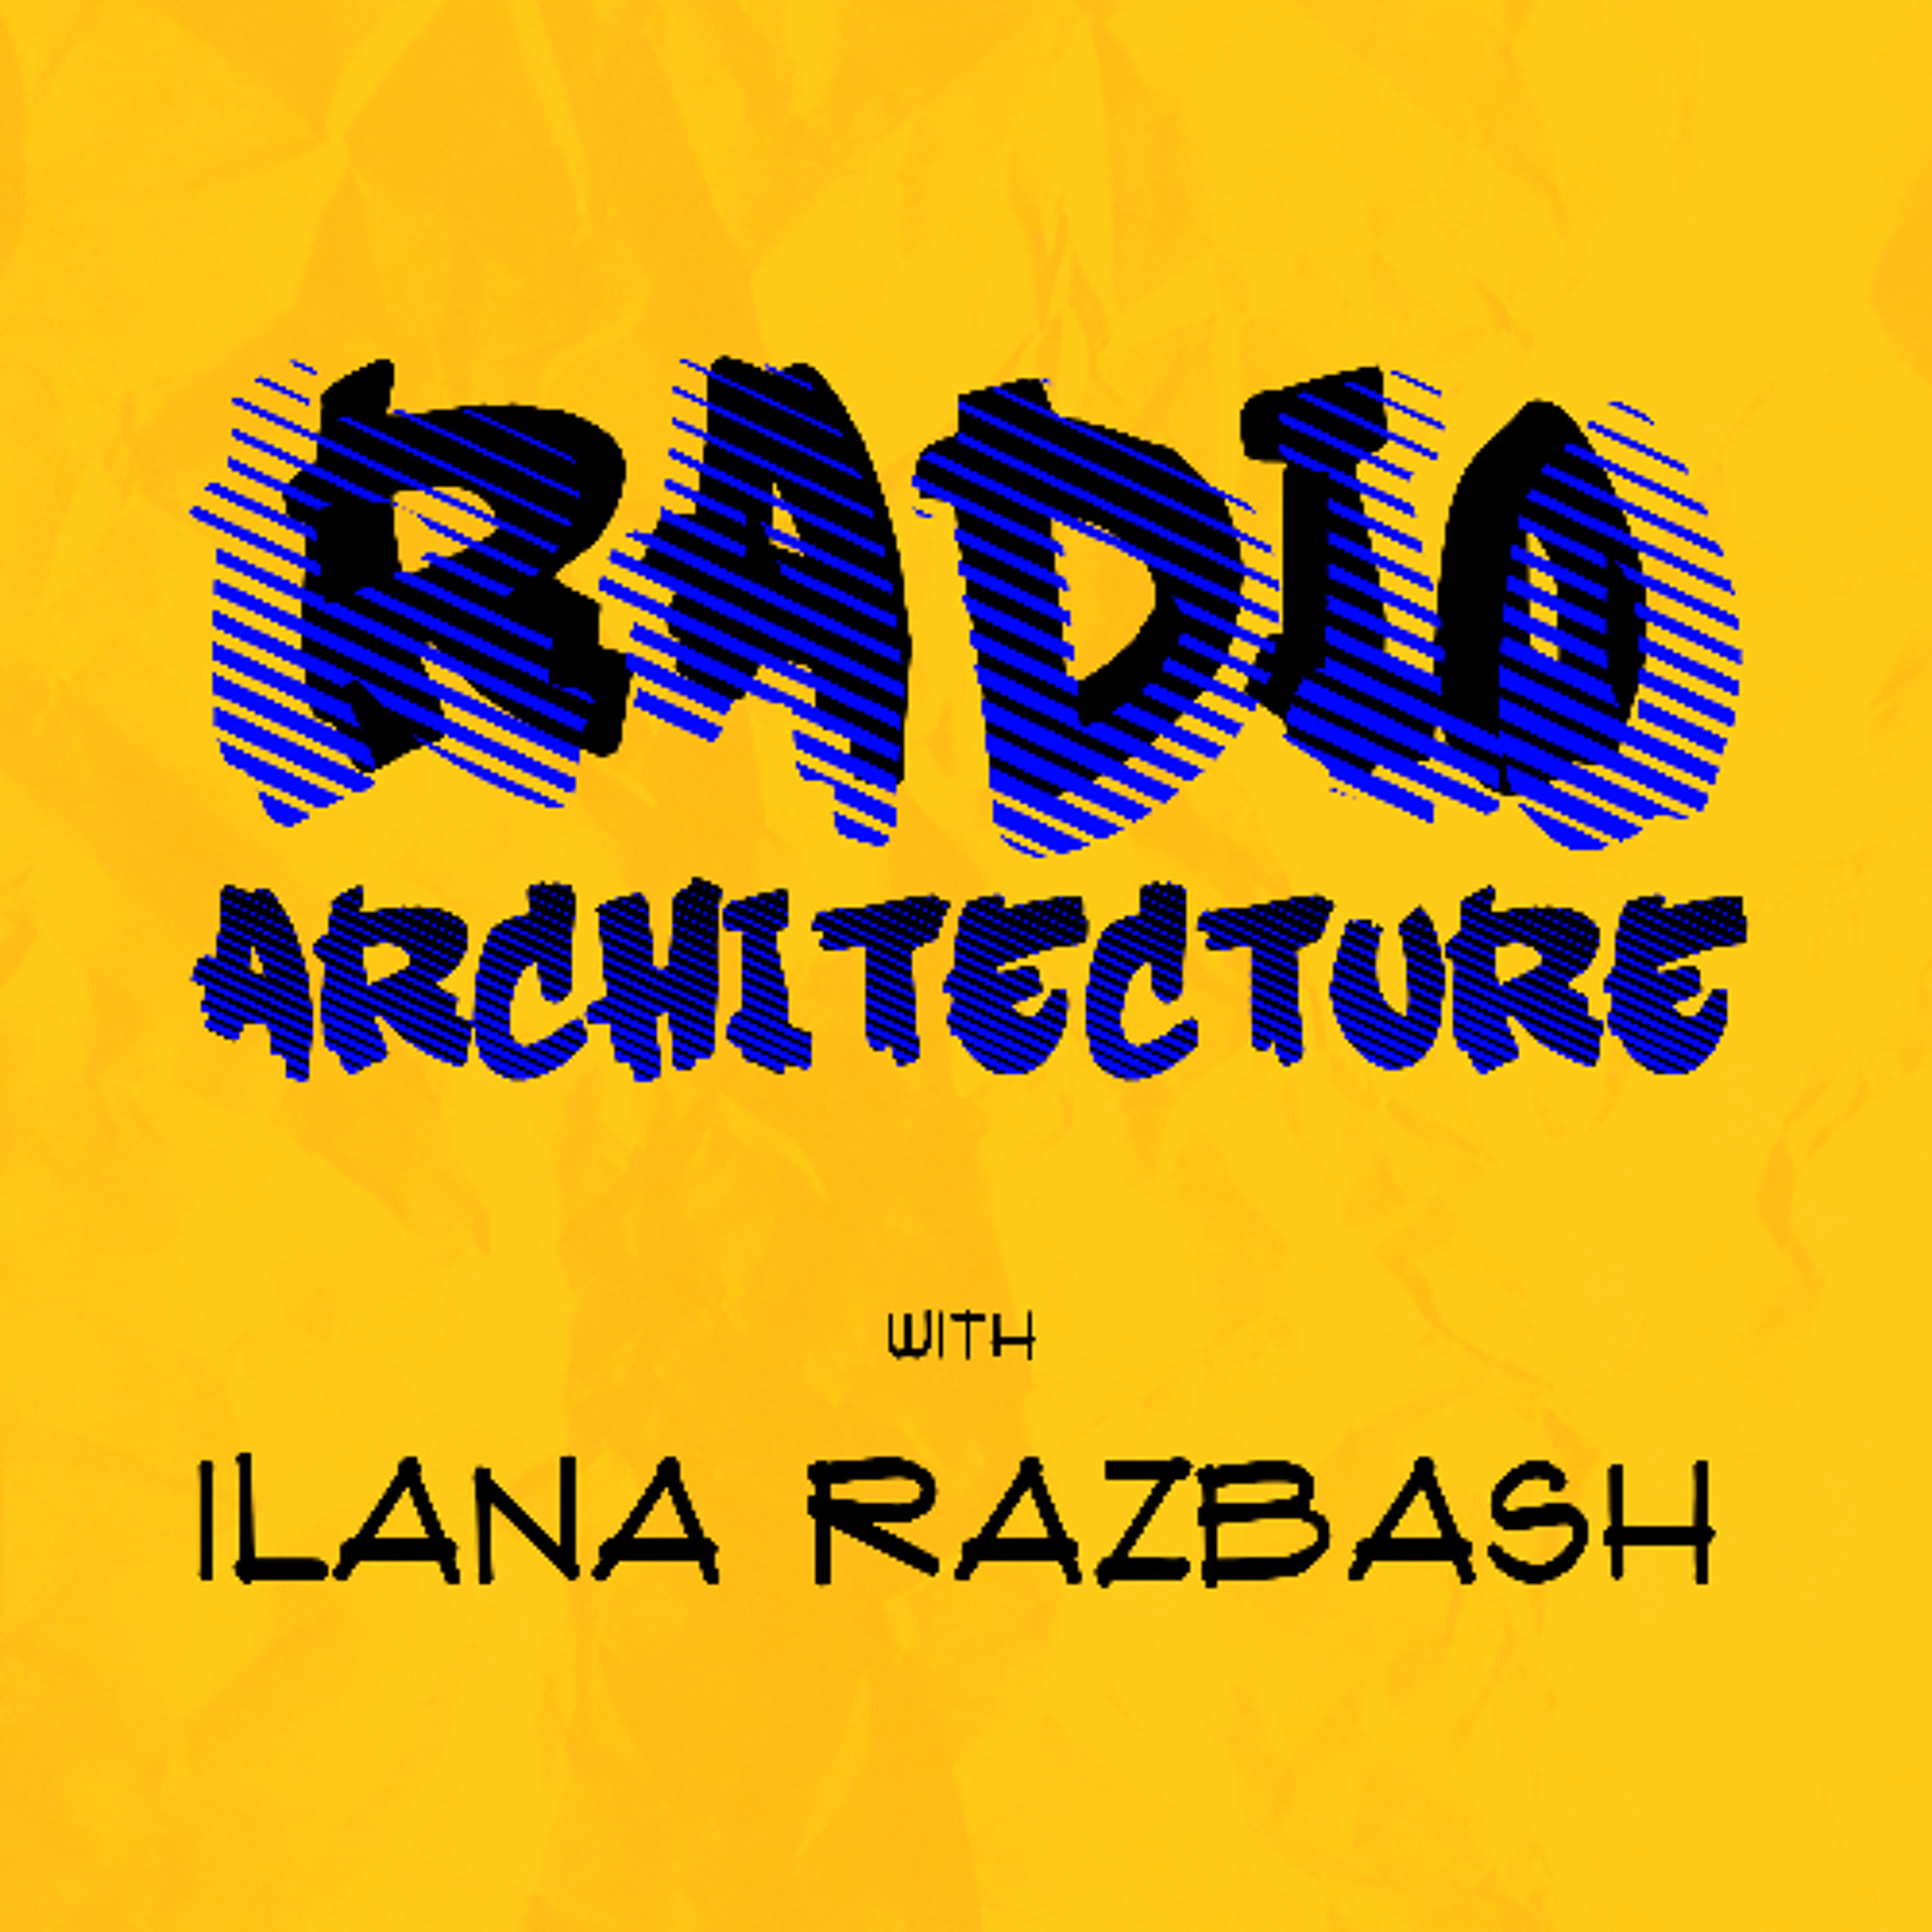 Radio Architecture with Ilana Razbash - Episode 39 (Jonathan Guttmann)